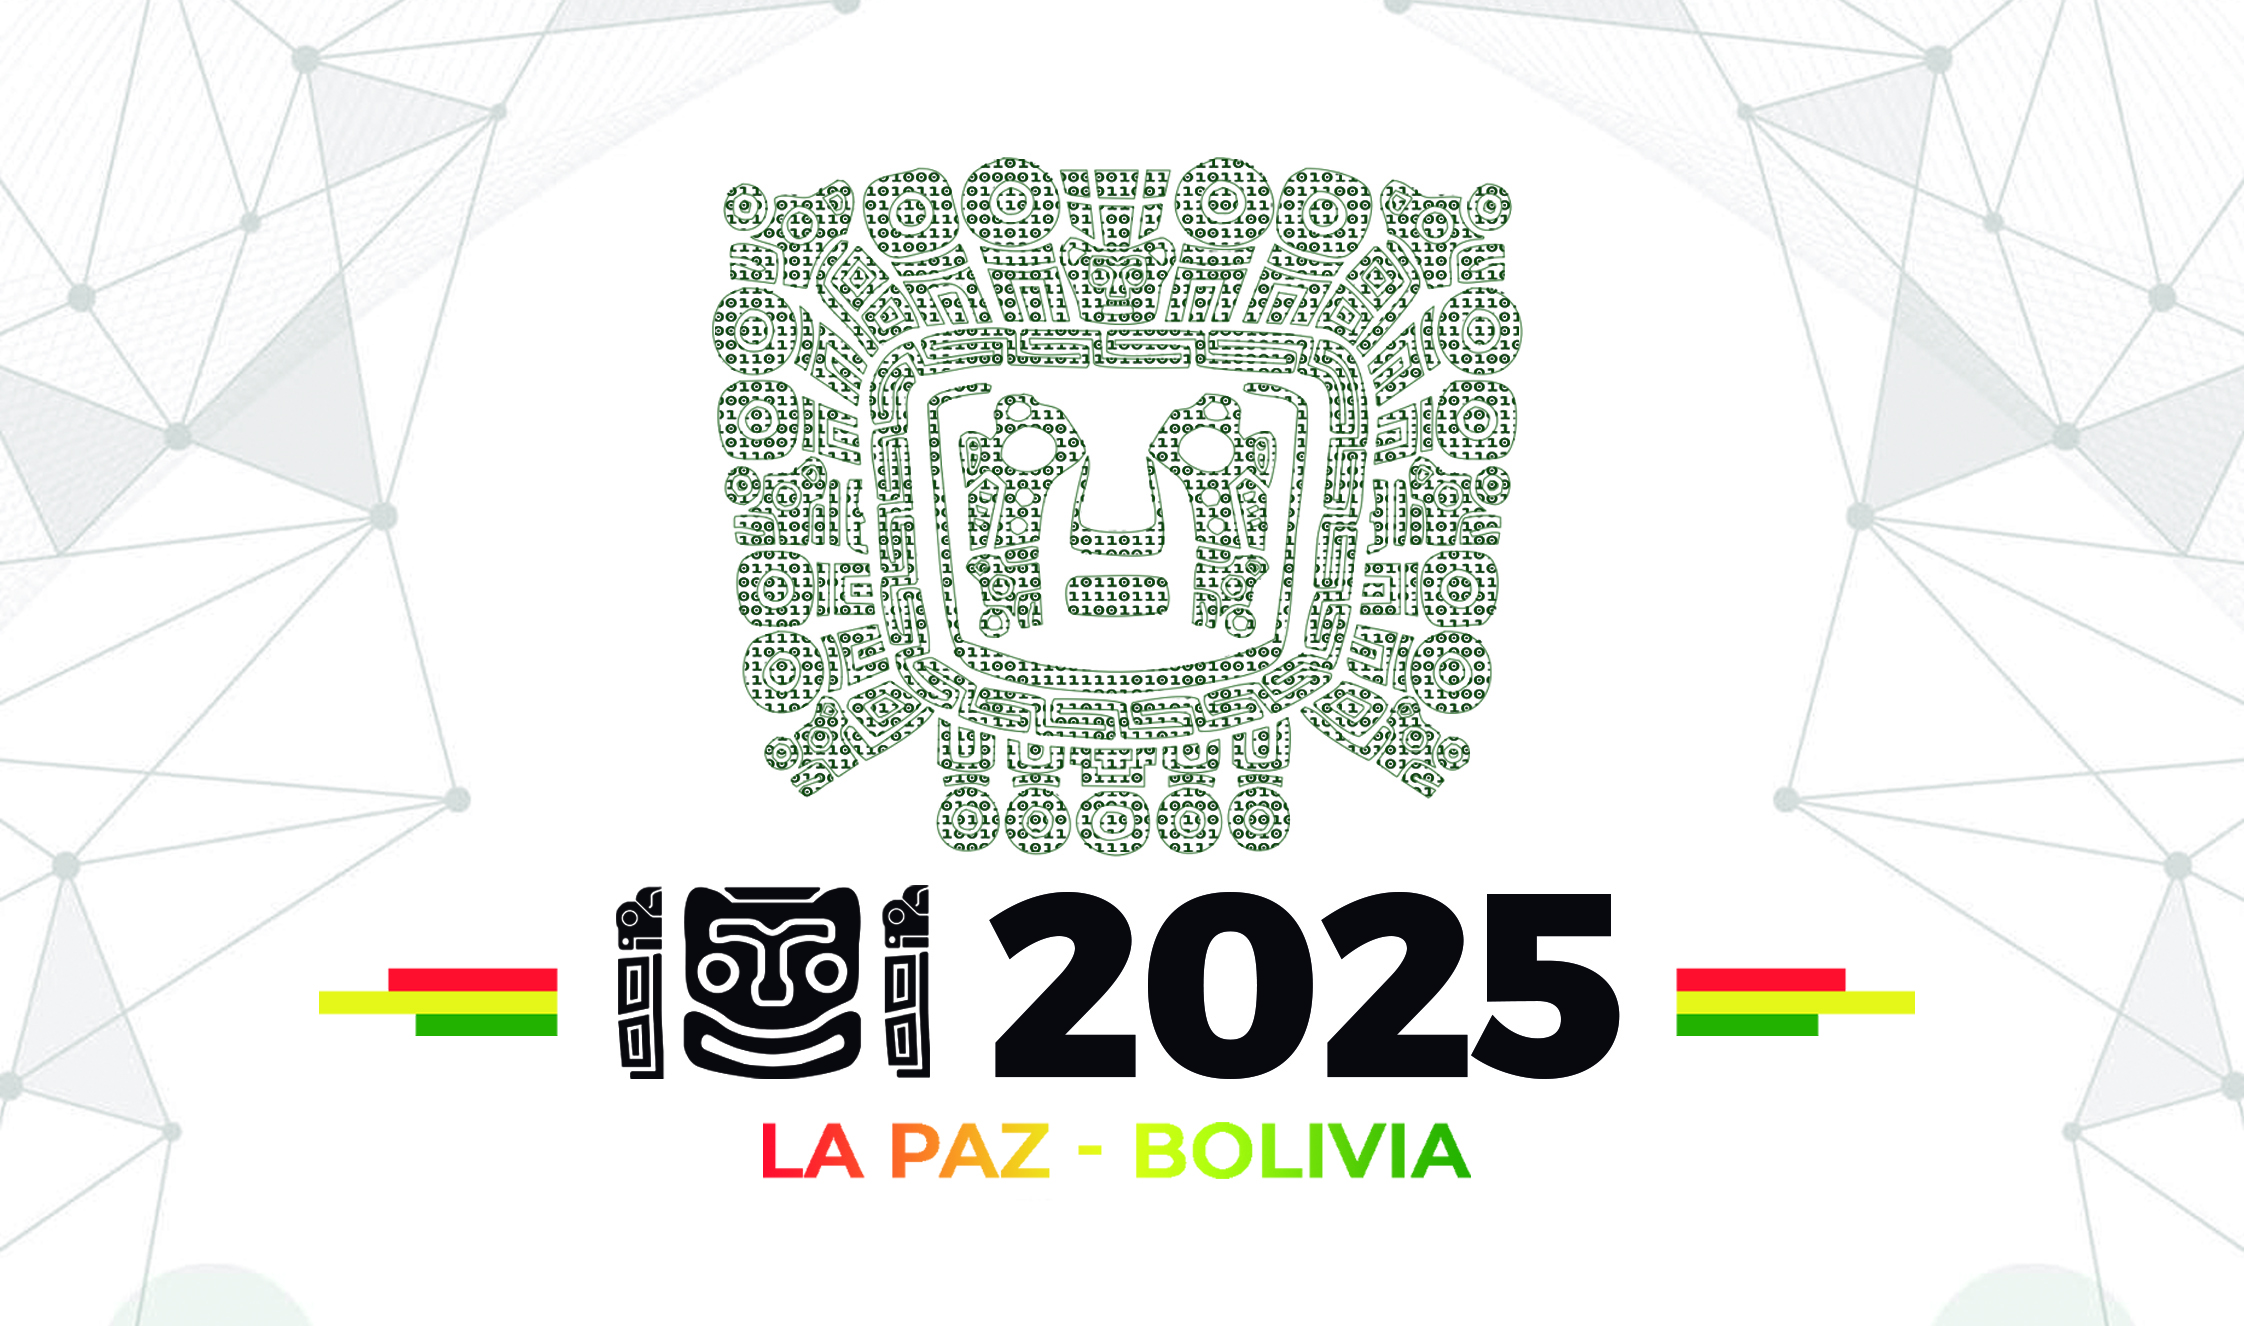 IOI 2025, La Paz - Bolivia